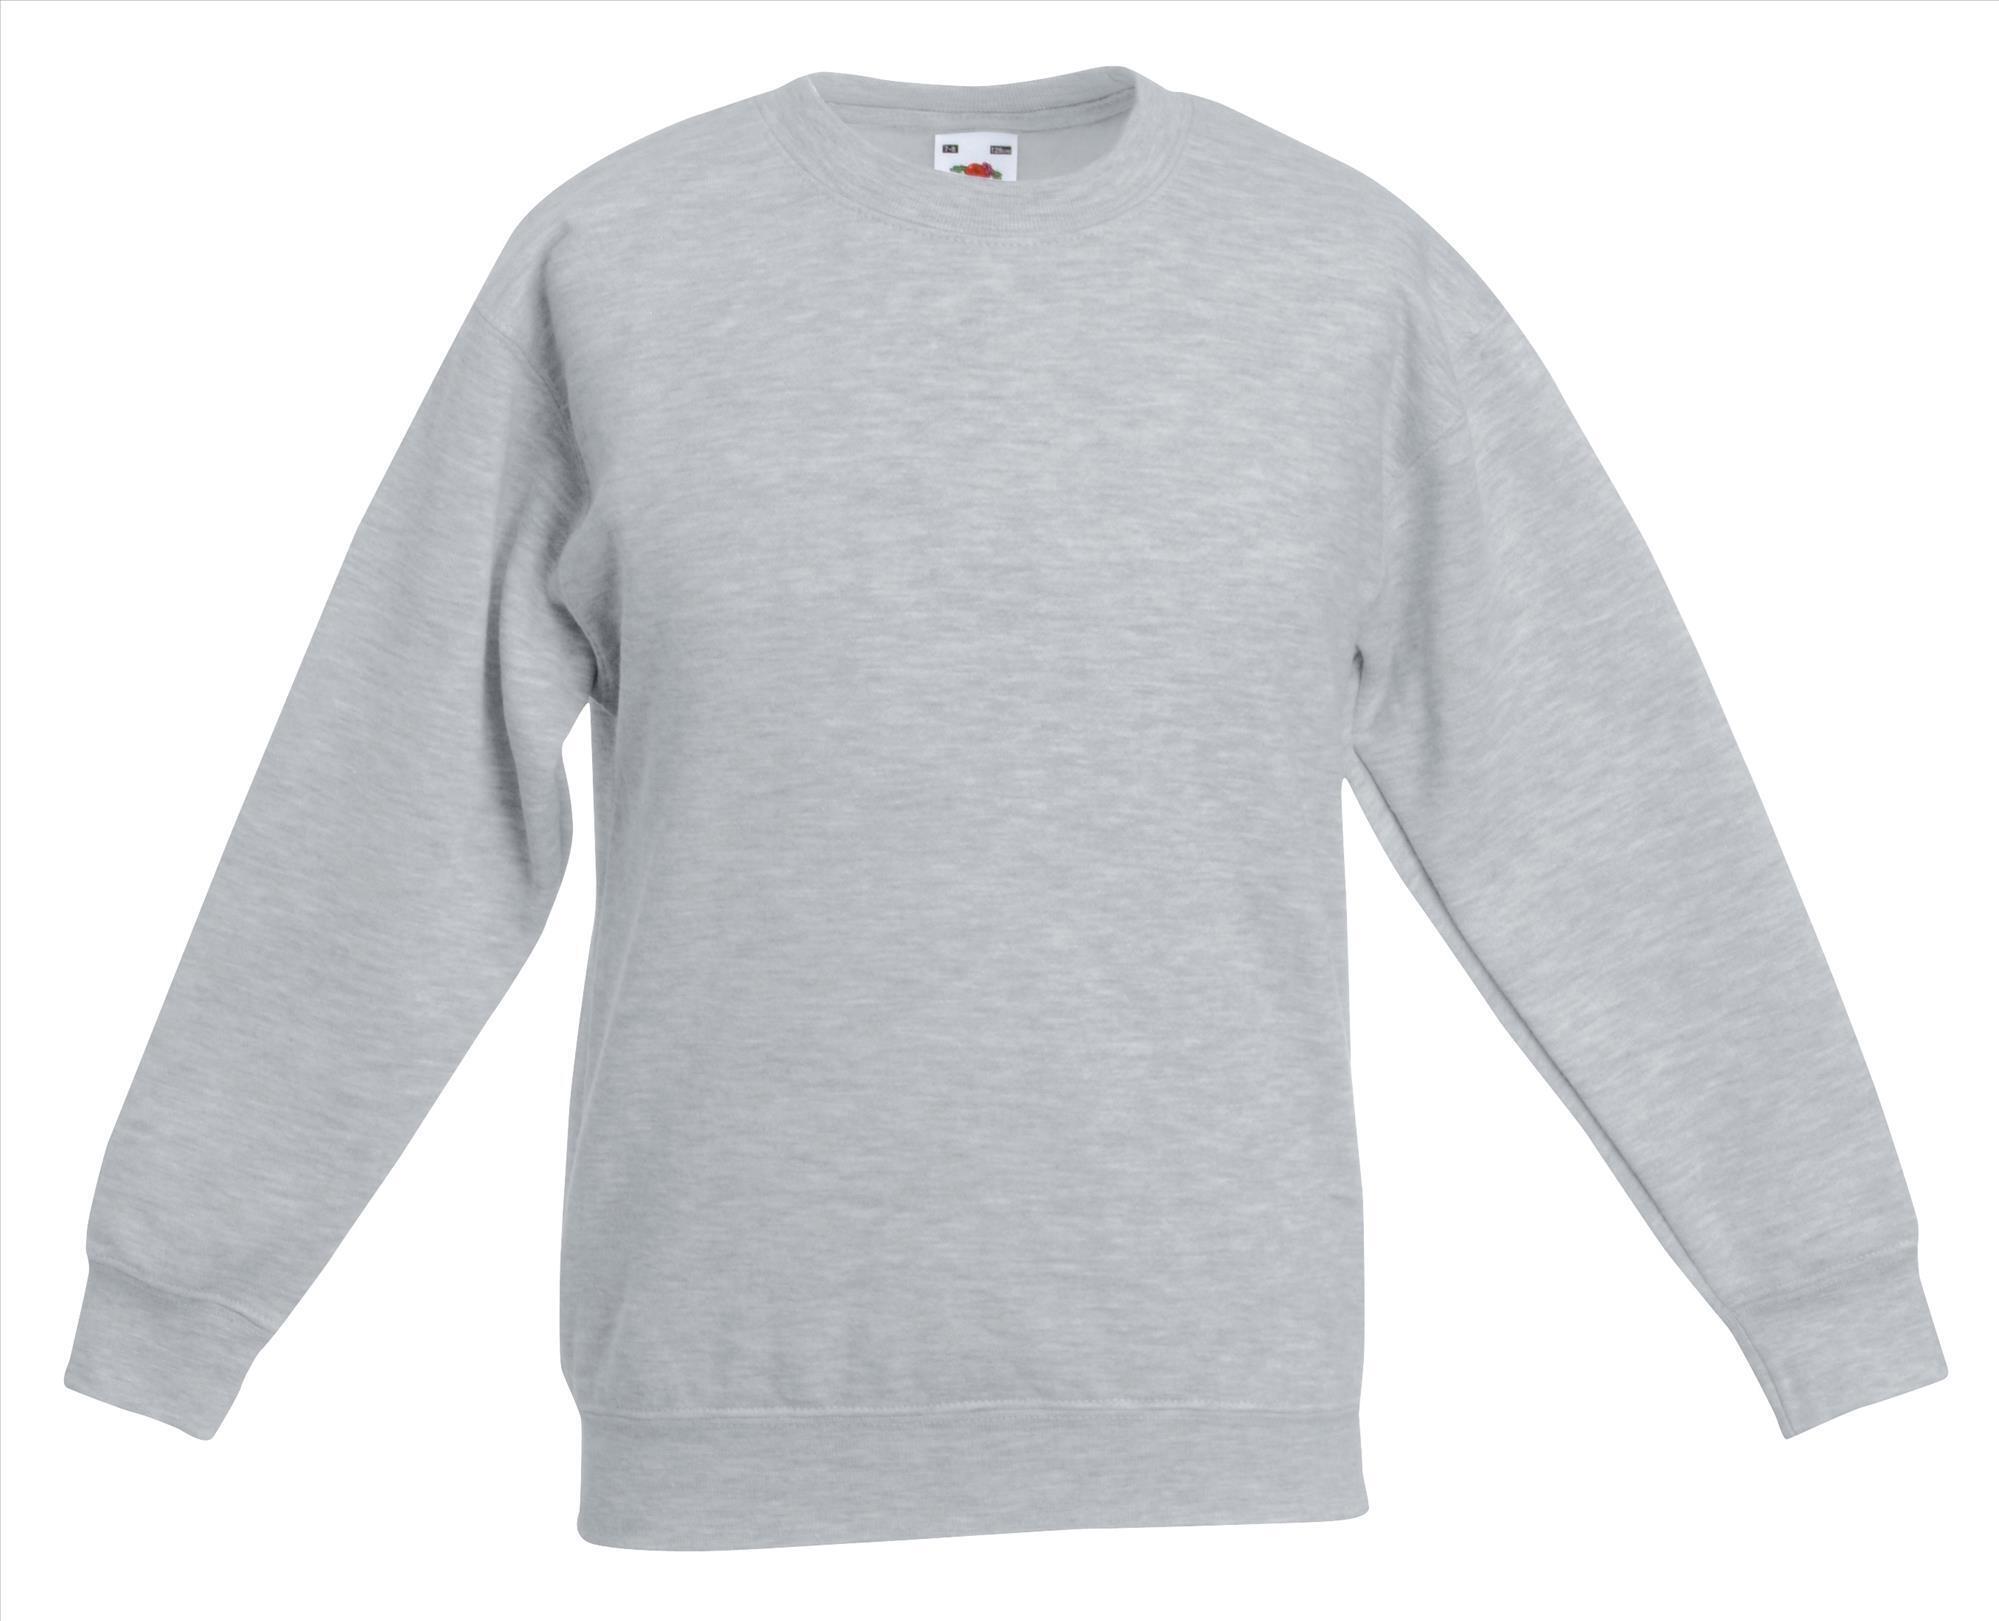 Kinder trui sweater licht grijs